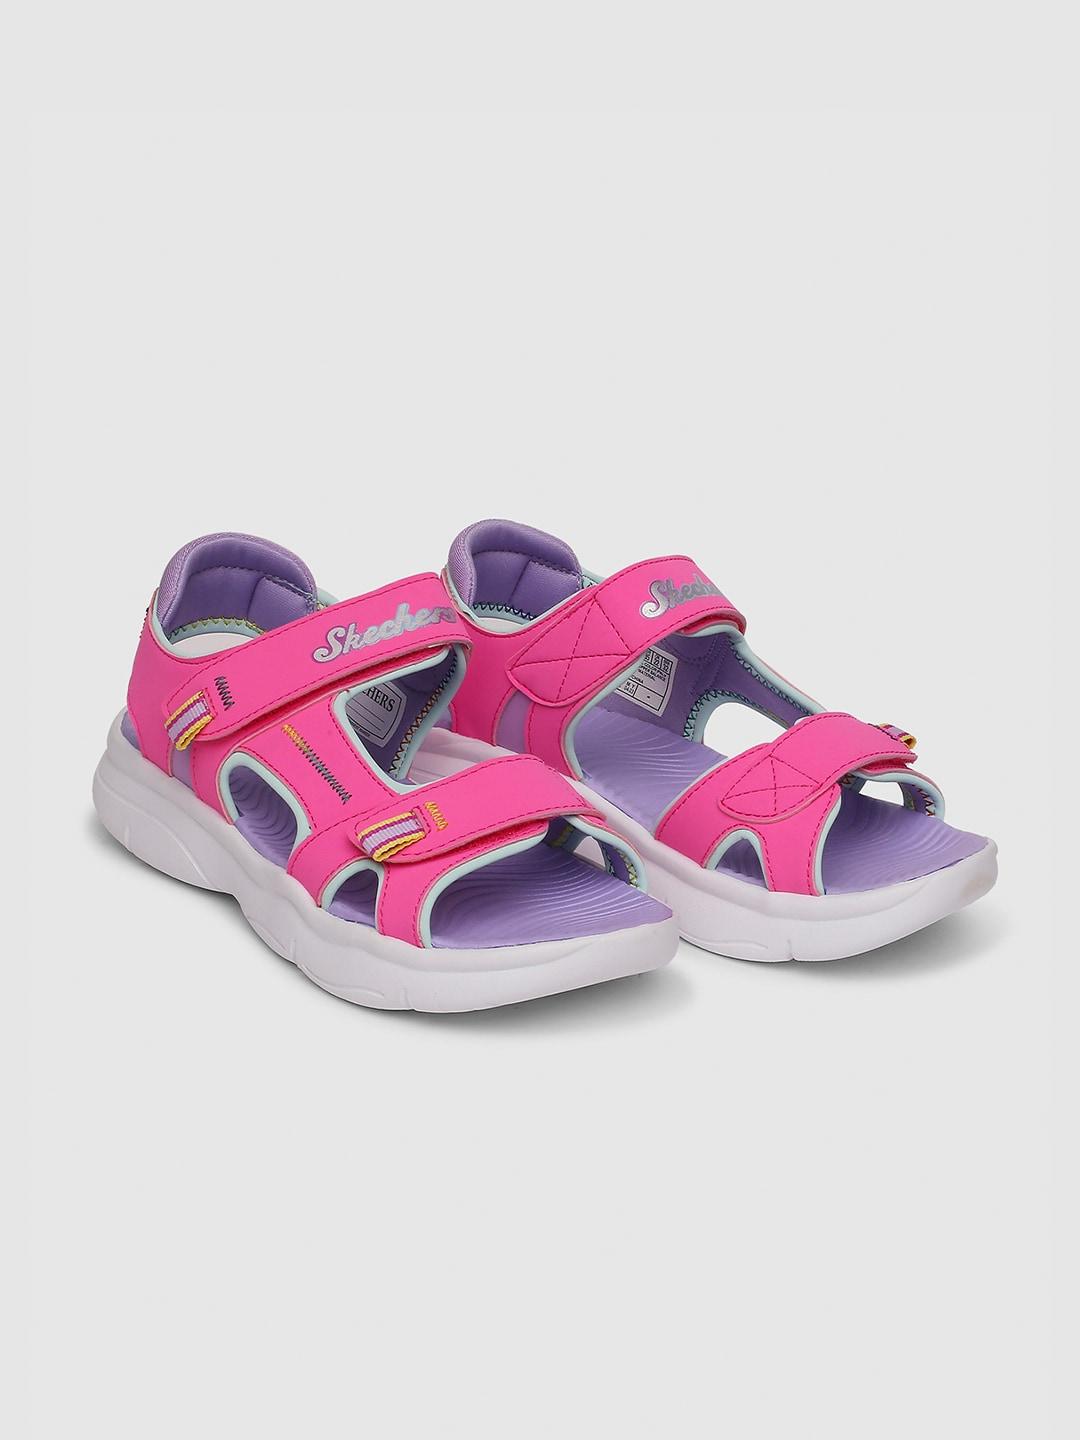 skechers-girls-flex-splash-vibrant-mood-sports-sandals